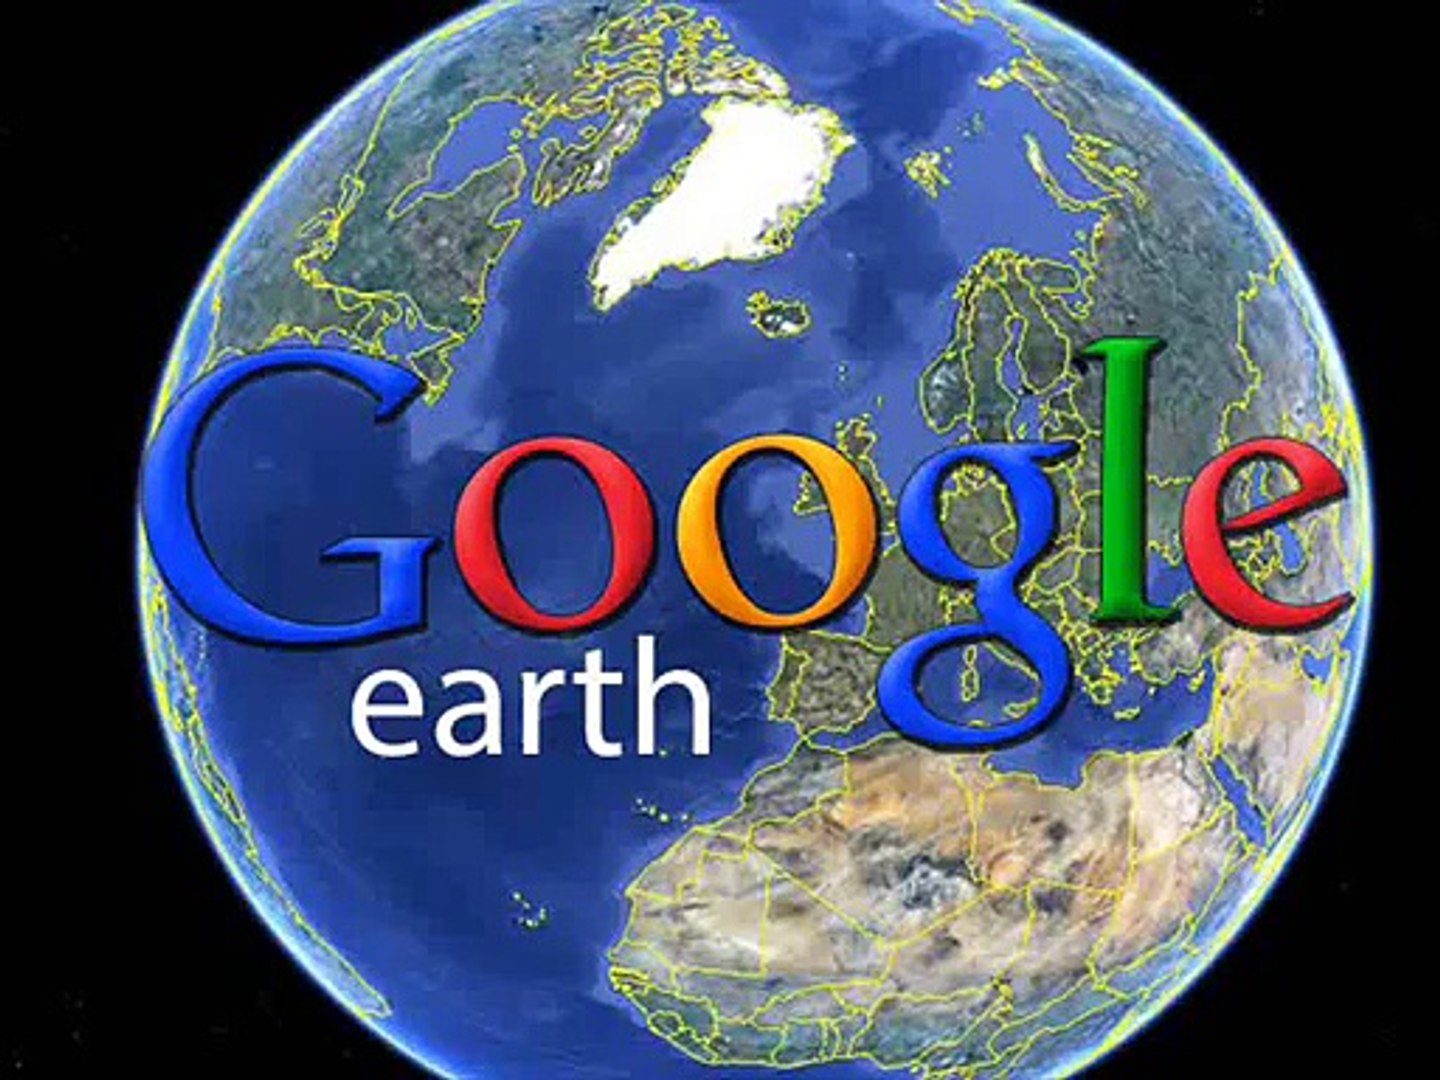 Download Google Earth Free تحميل برنامج جوجل ايرث مجانا - فيديو Dailymotion